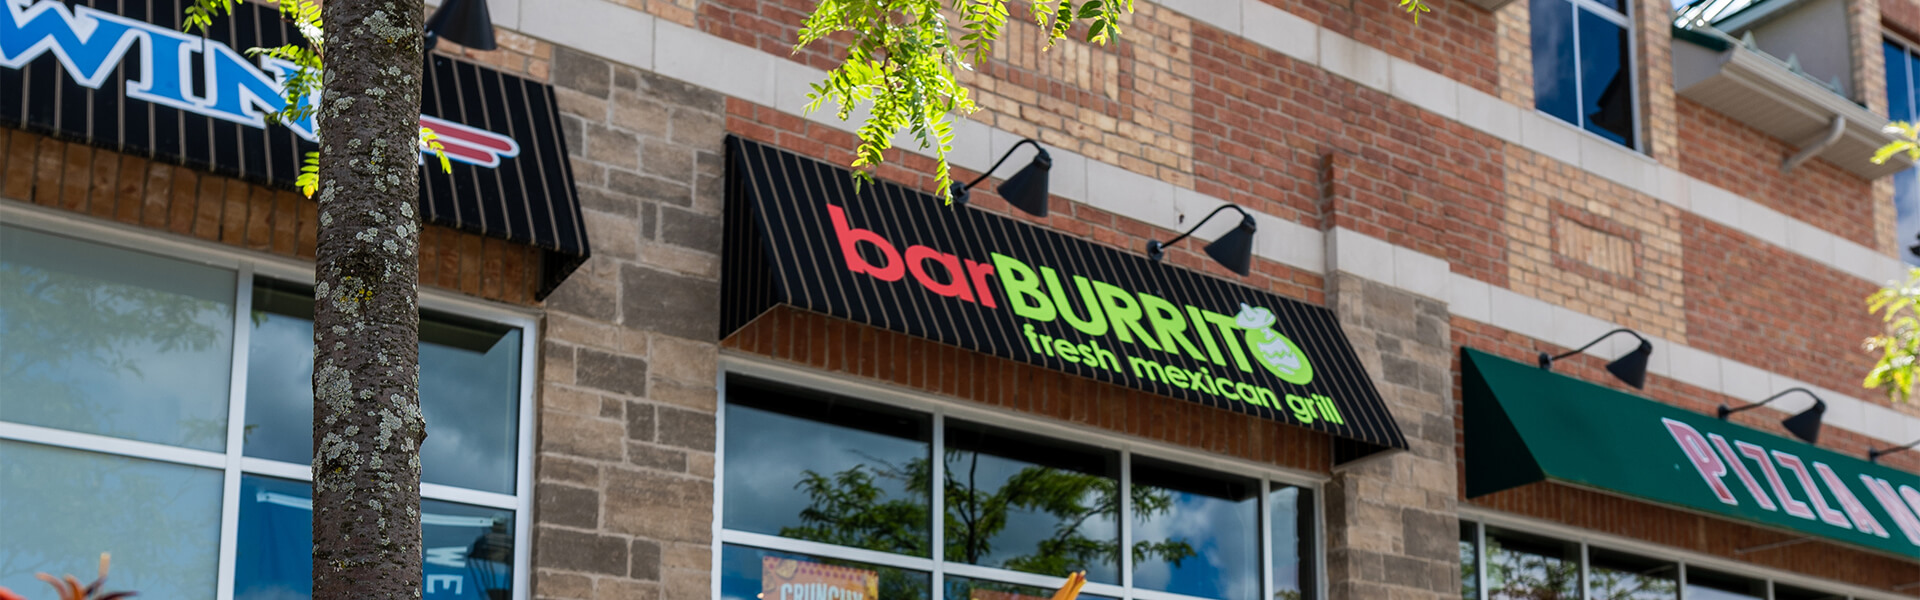 Bar Burrito - Exterior - Banner